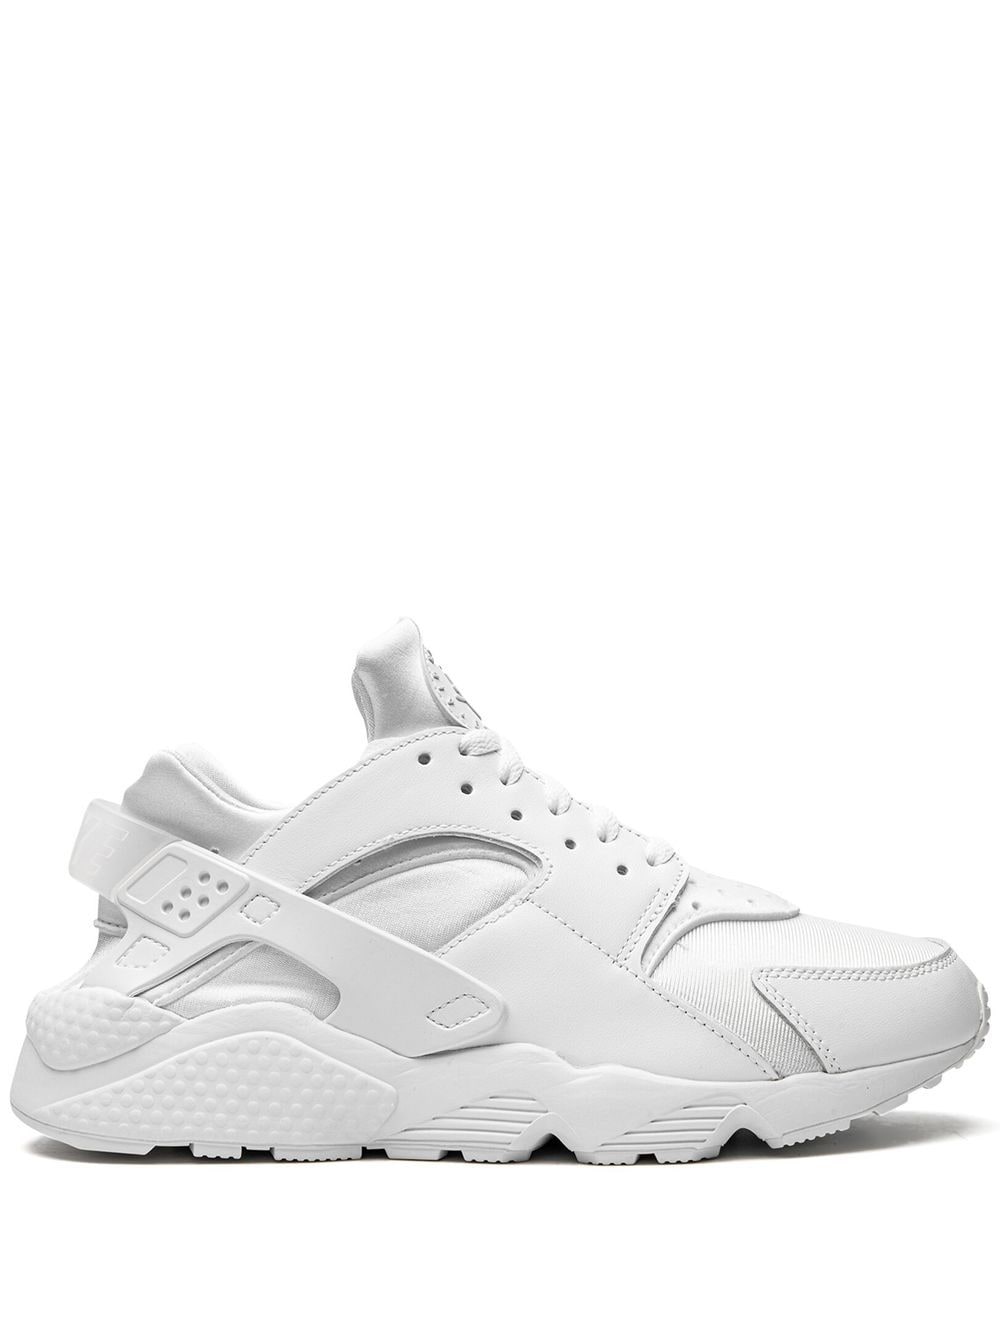 Nike Air Huarache Low-top Sneakers In White